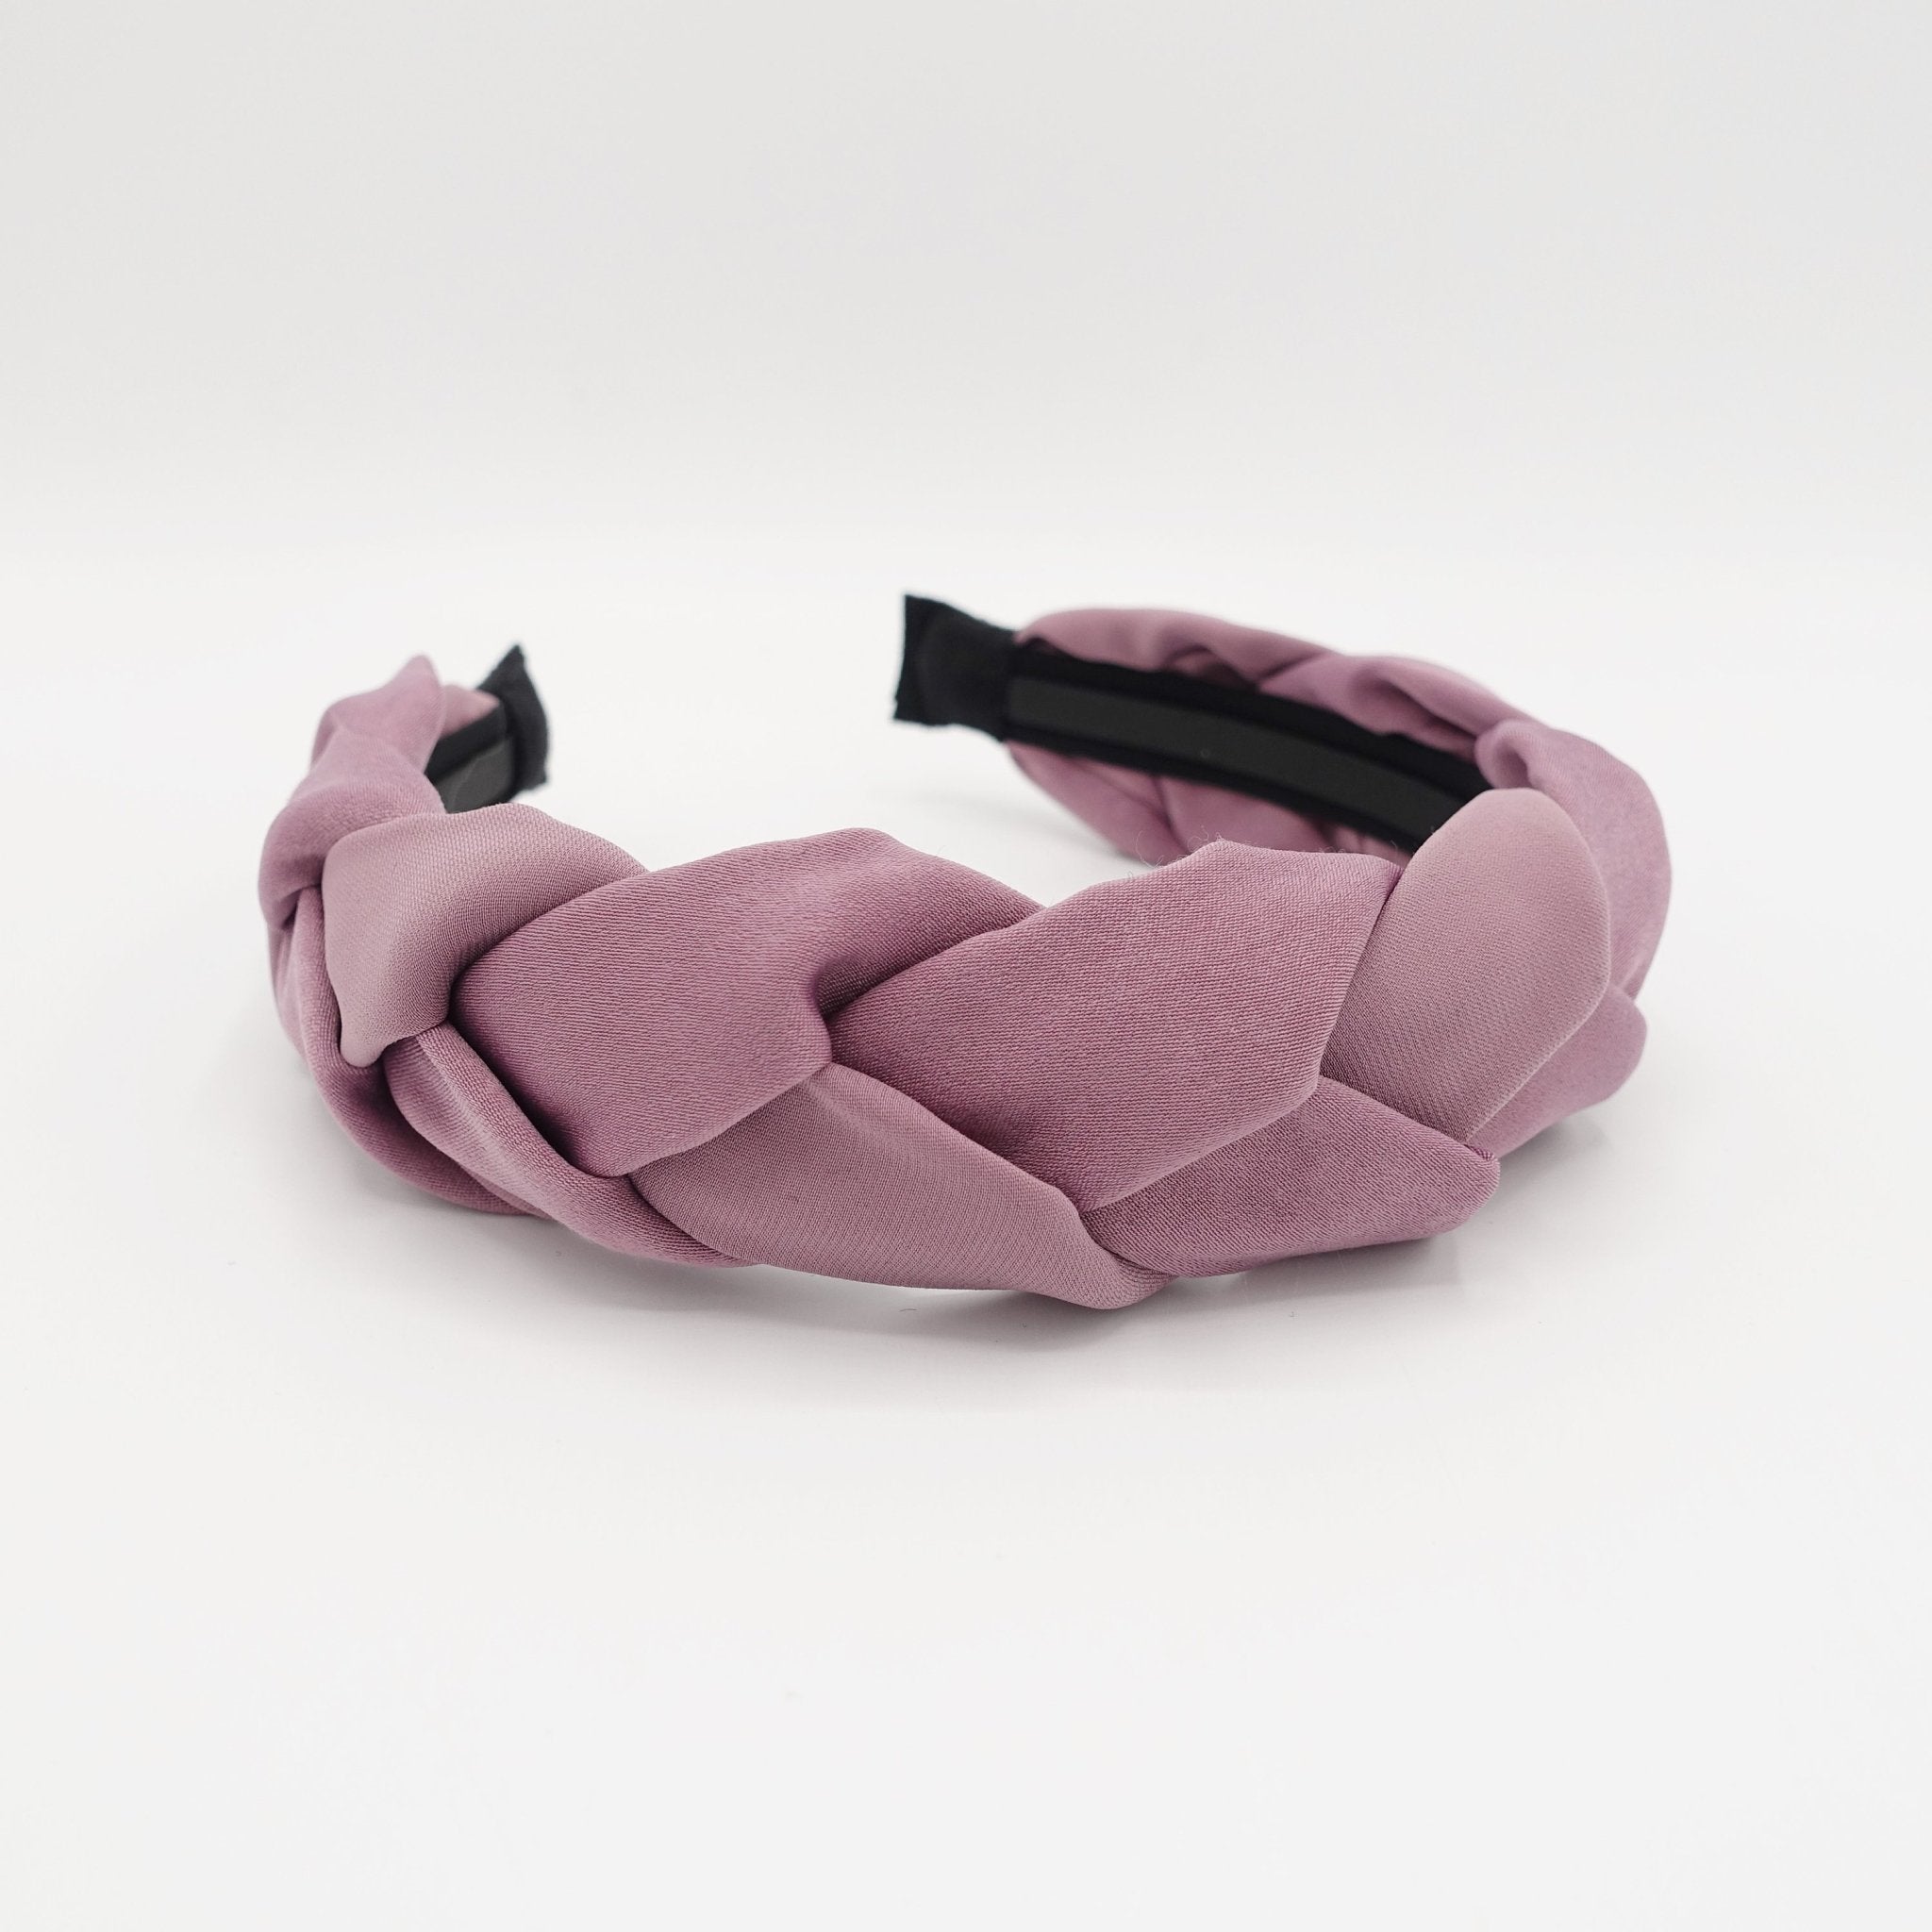 Reinig de vloer Theseus voldoende no-pleats braided headband for women – veryshine.com